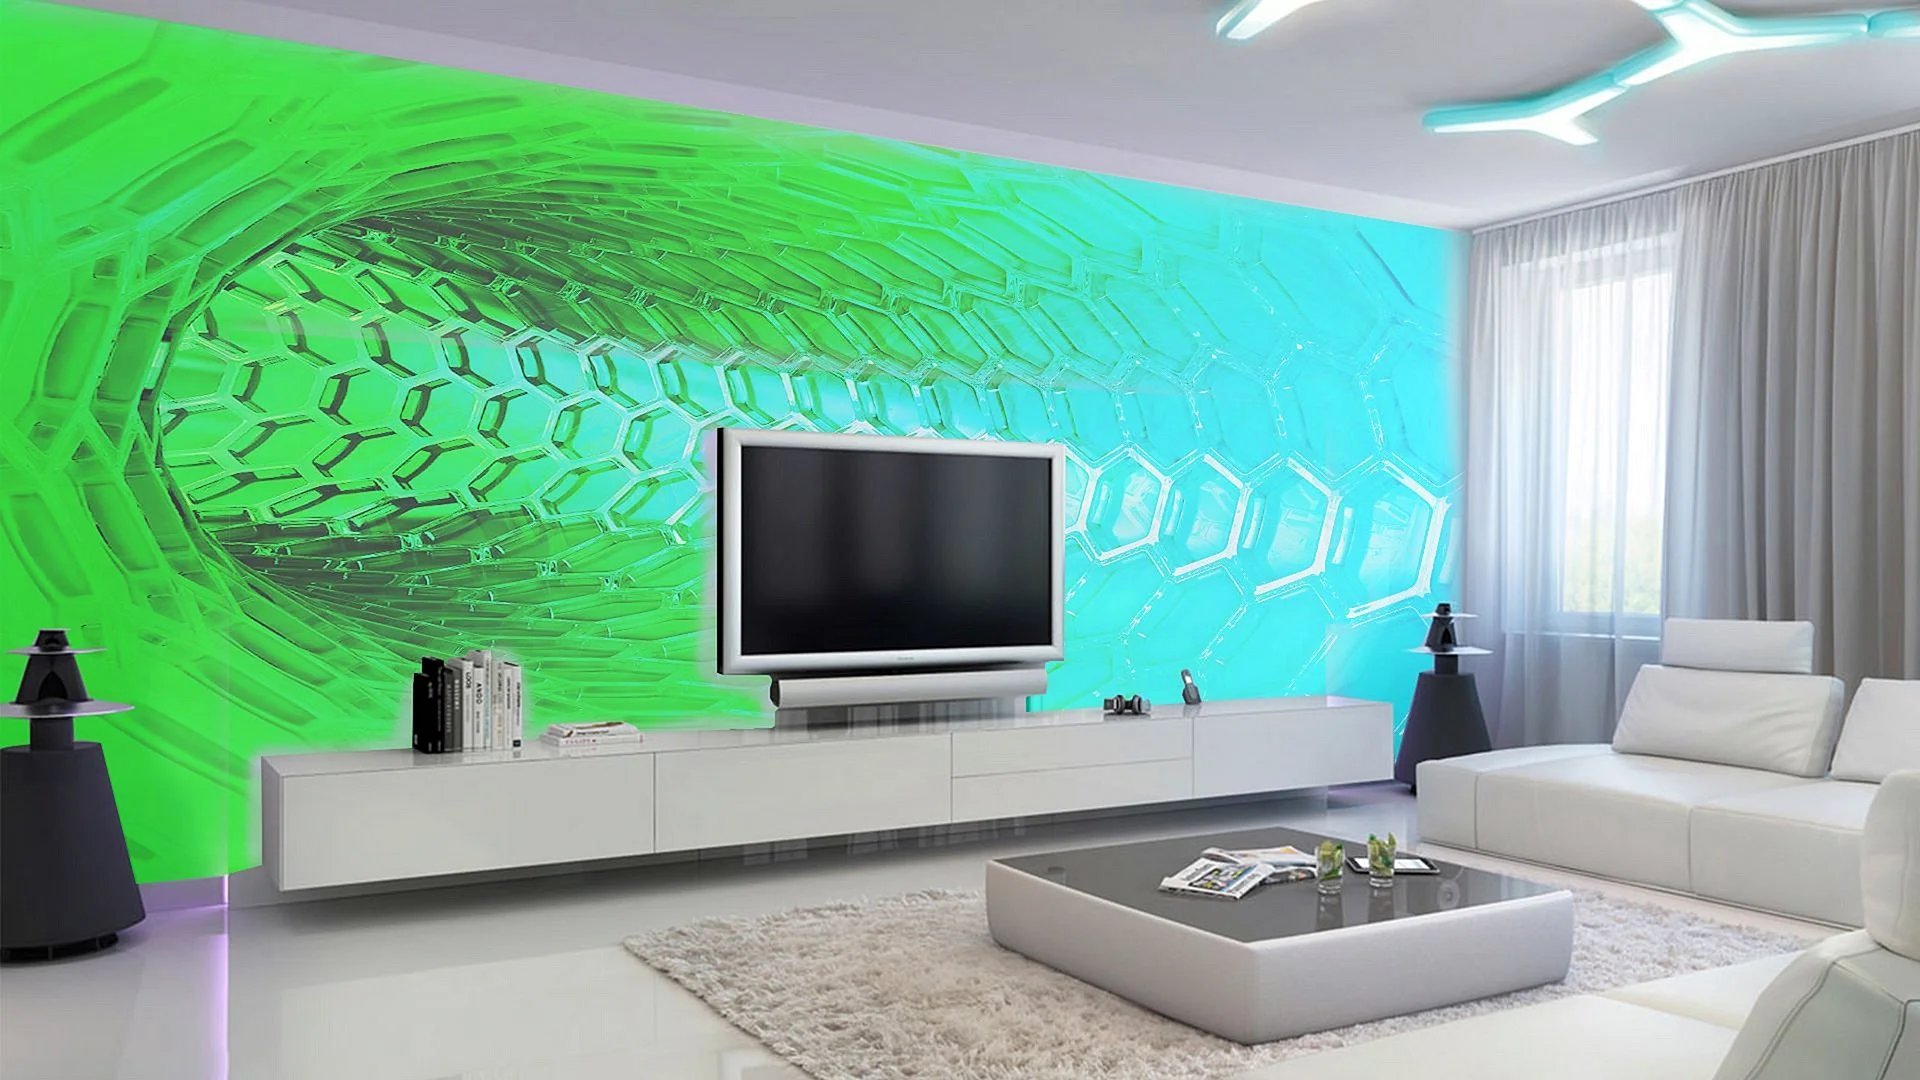 3D Design For Wall Wallpaper